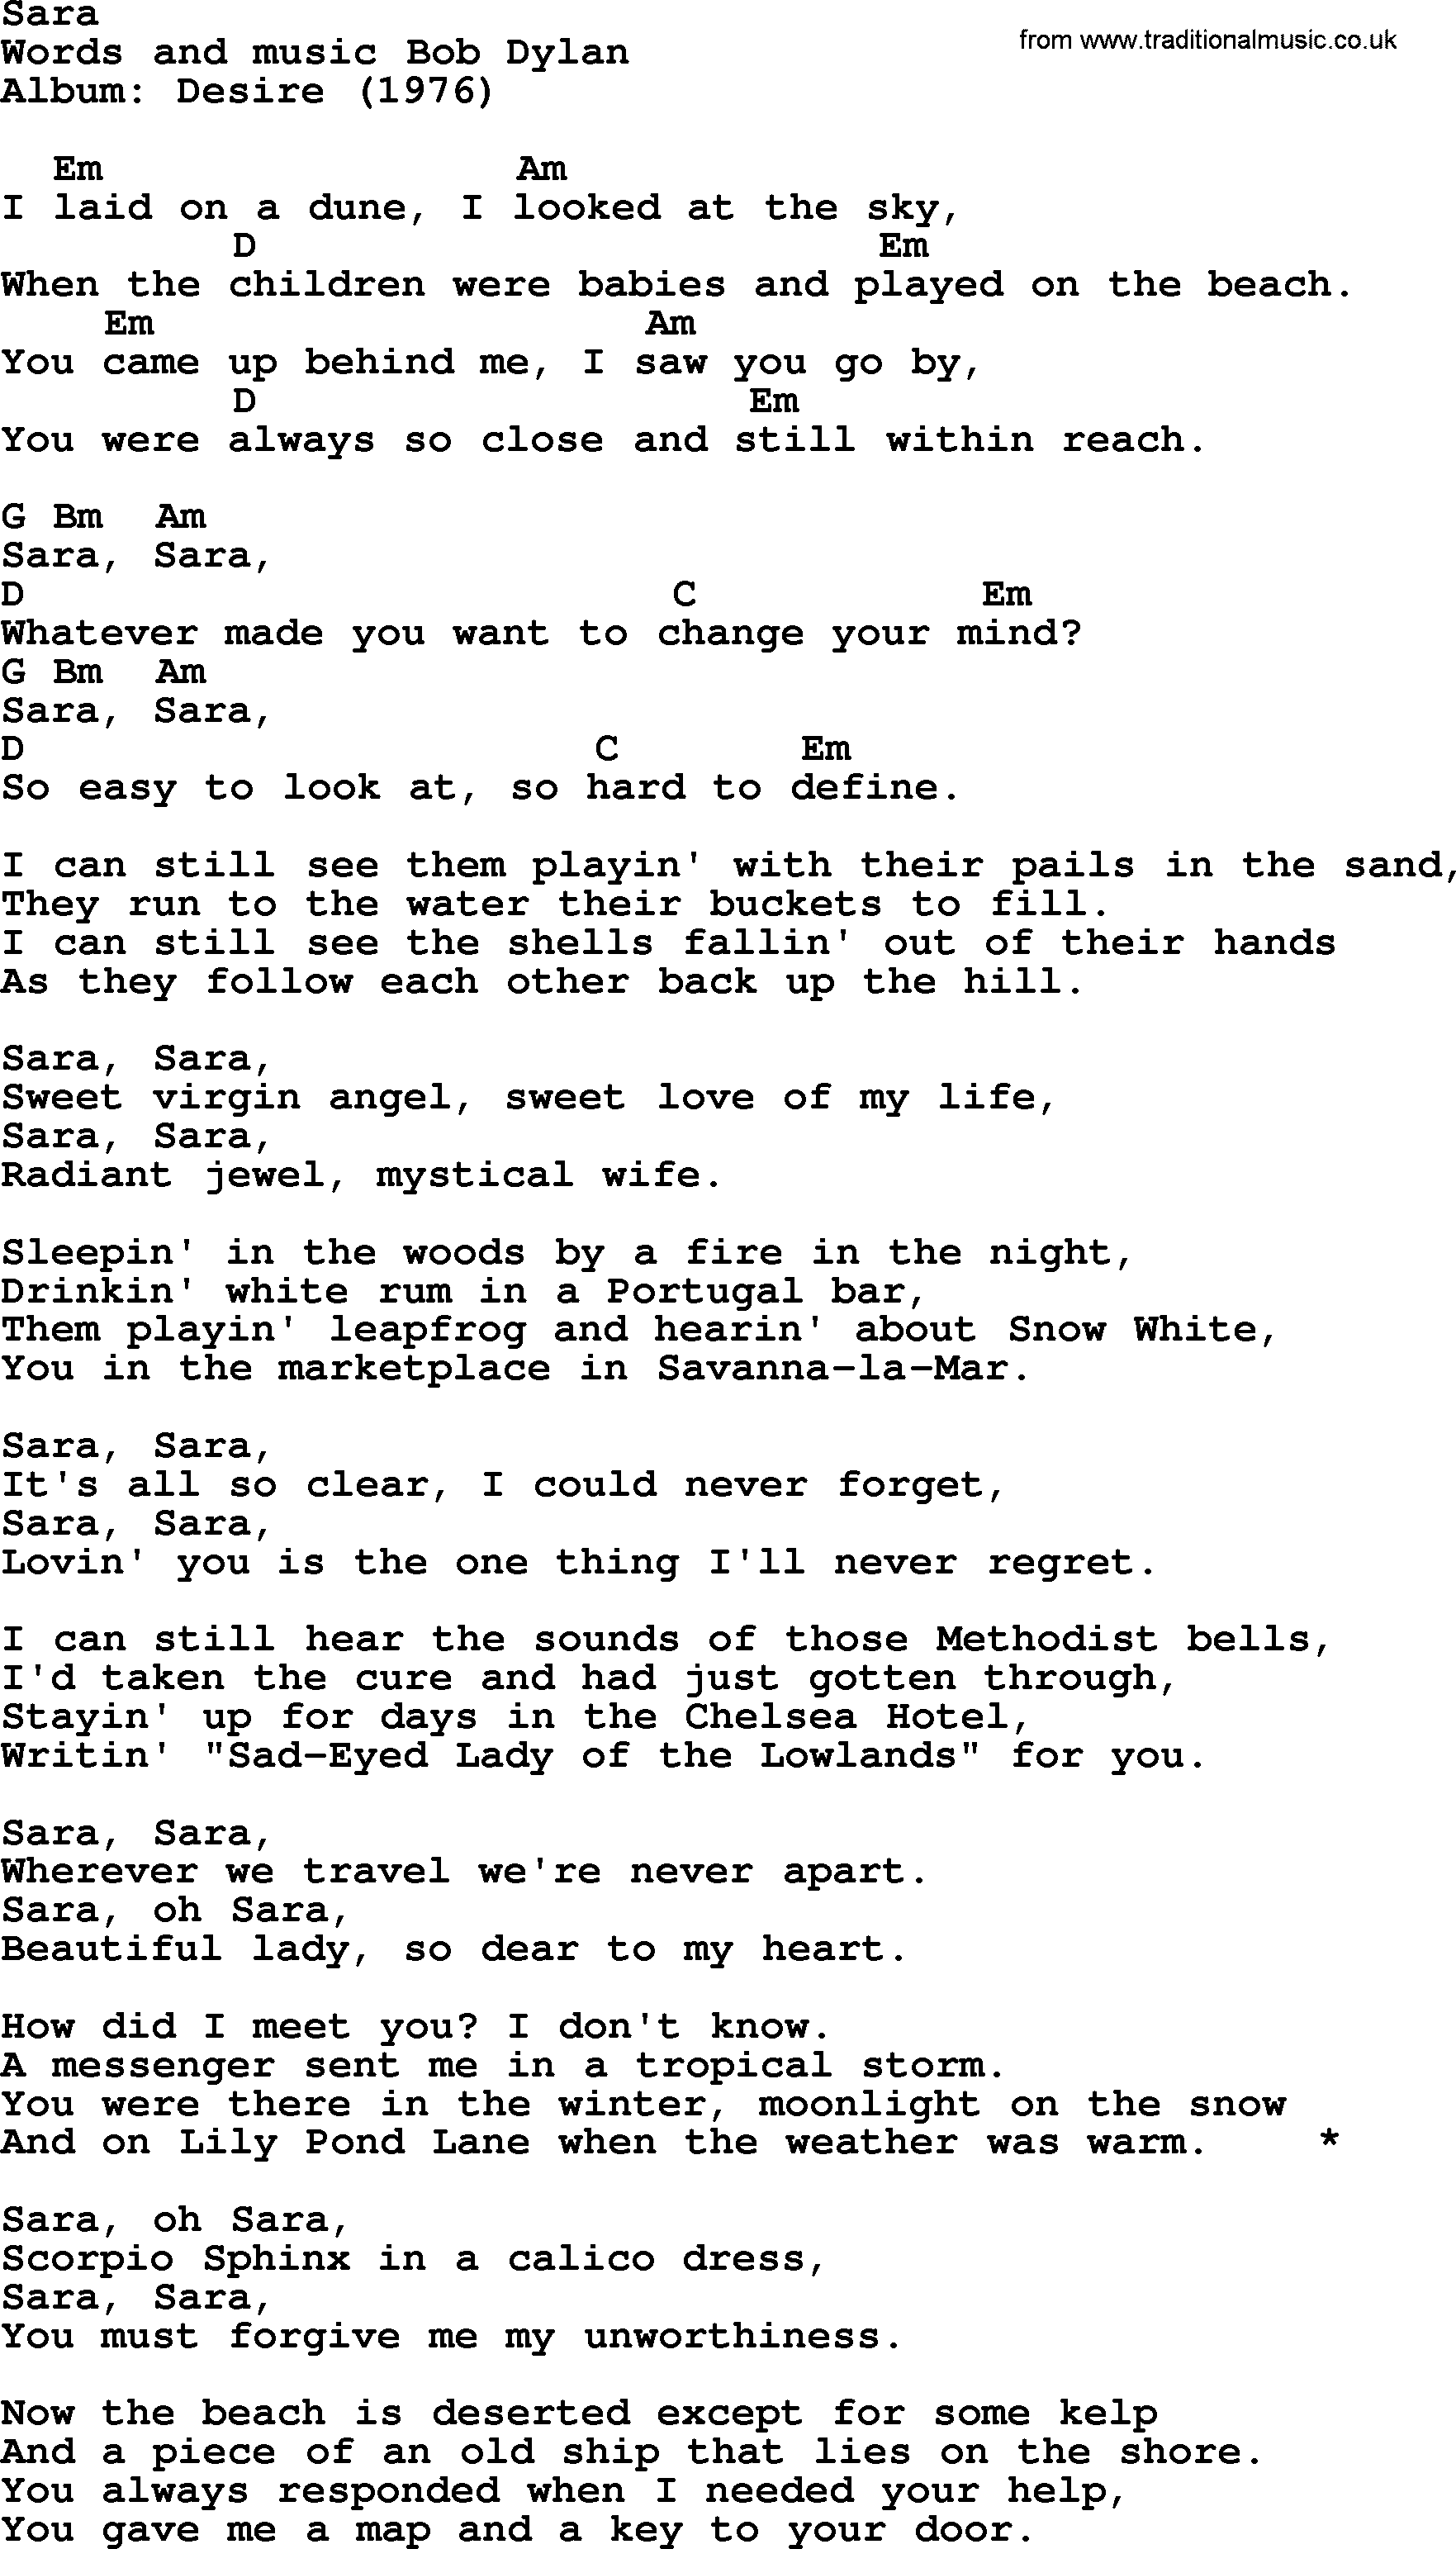 Bob Dylan song, lyrics with chords - Sara